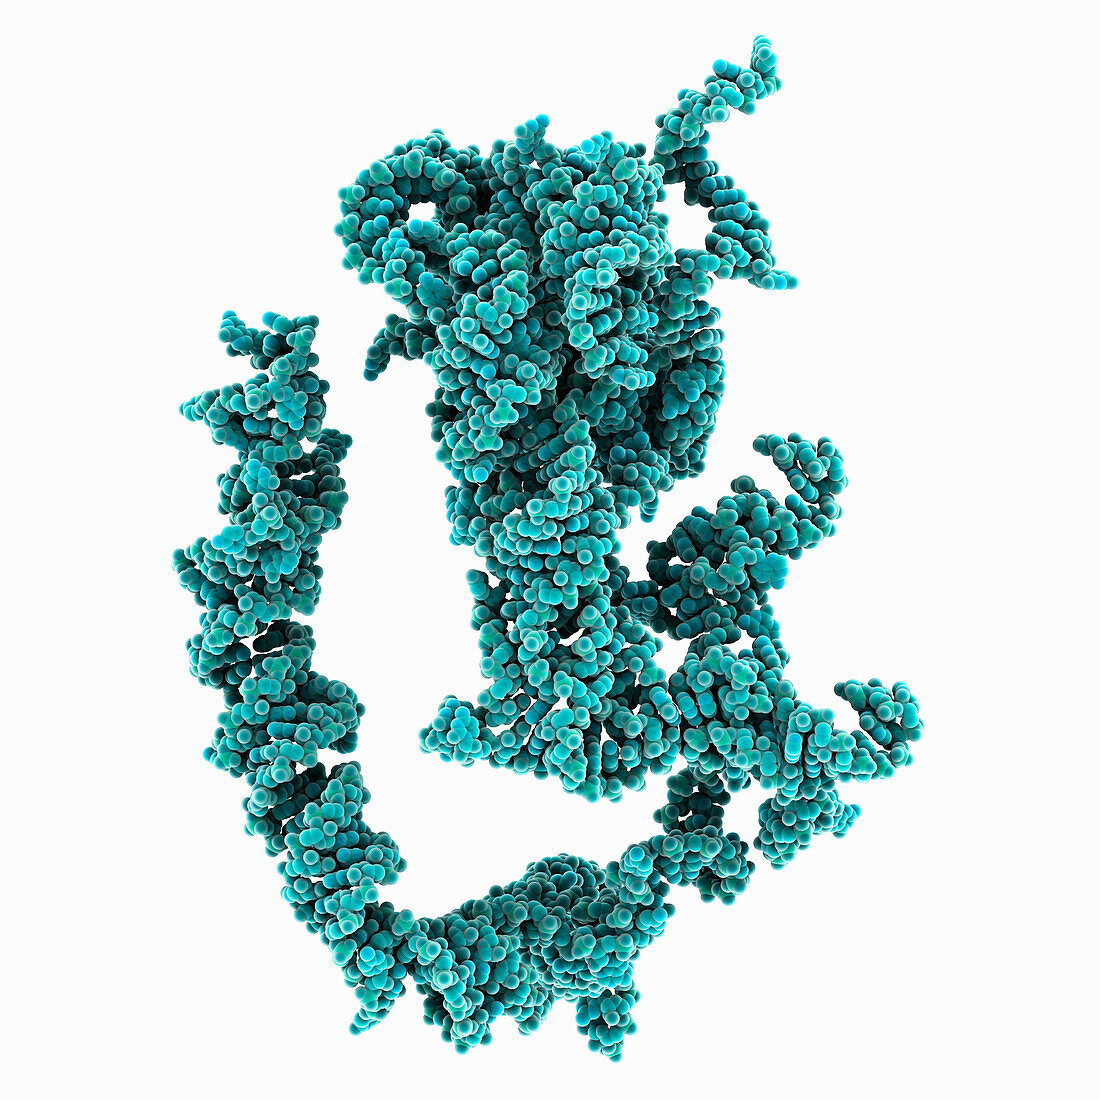 Human 80S ribosome RNA structure, molecular model